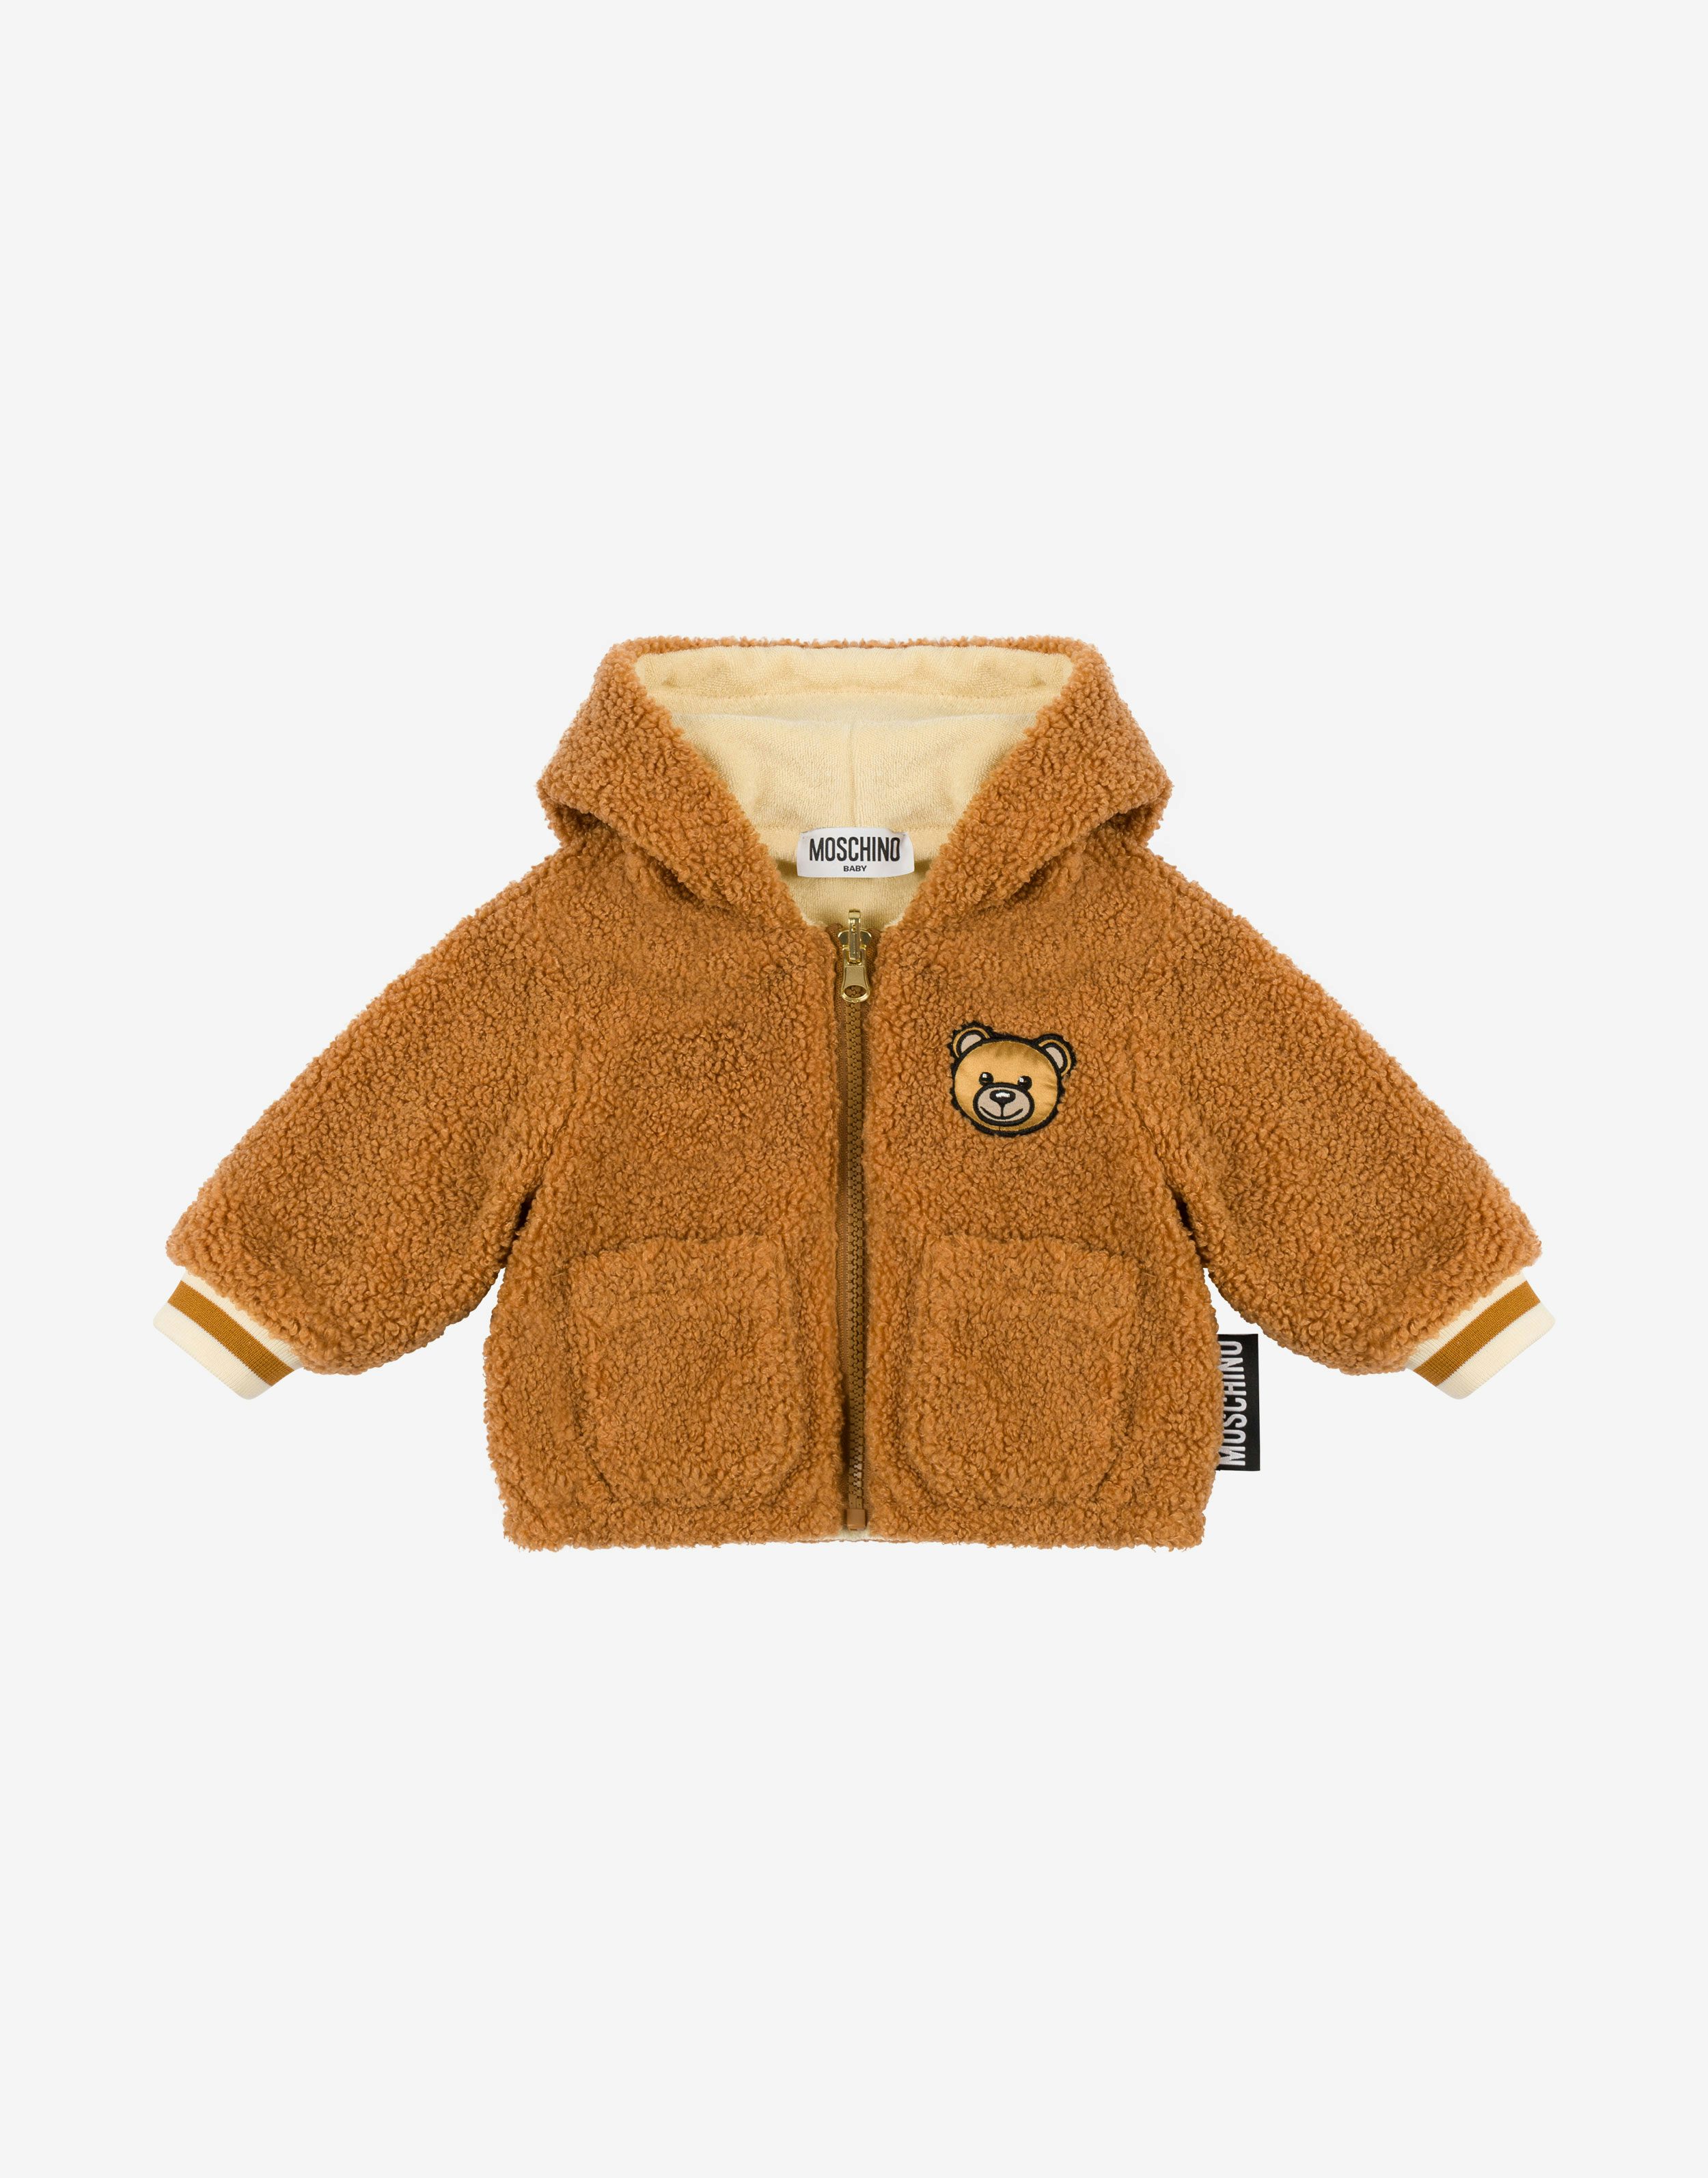 Moschino Teddy Bear Reversible Jacket